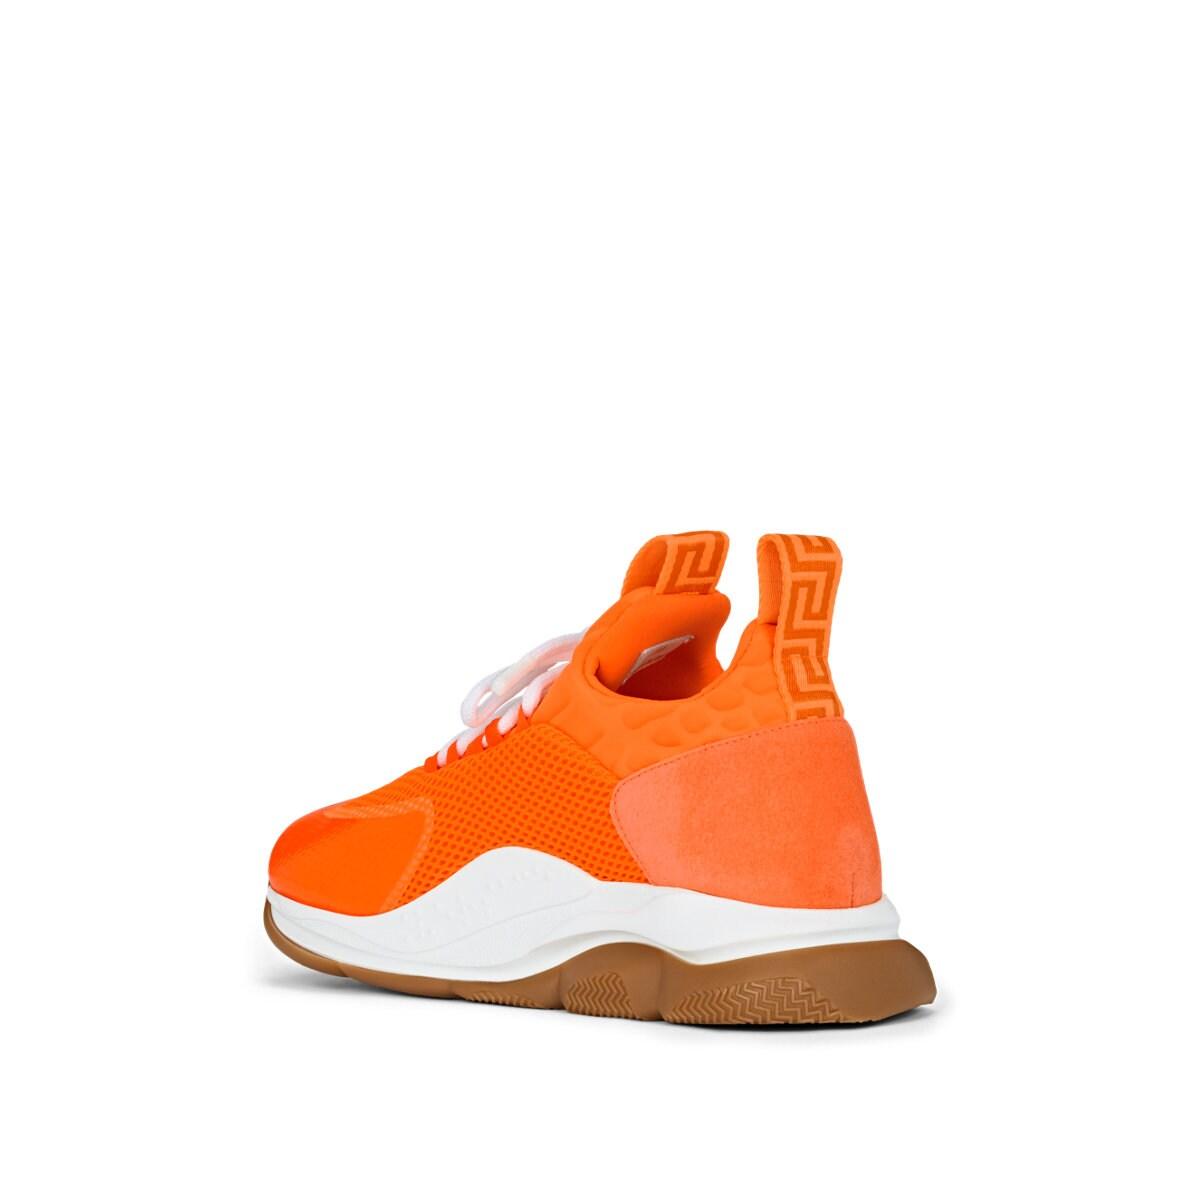 Versace Suede Chain Reaction Sneakers in Orange - Lyst